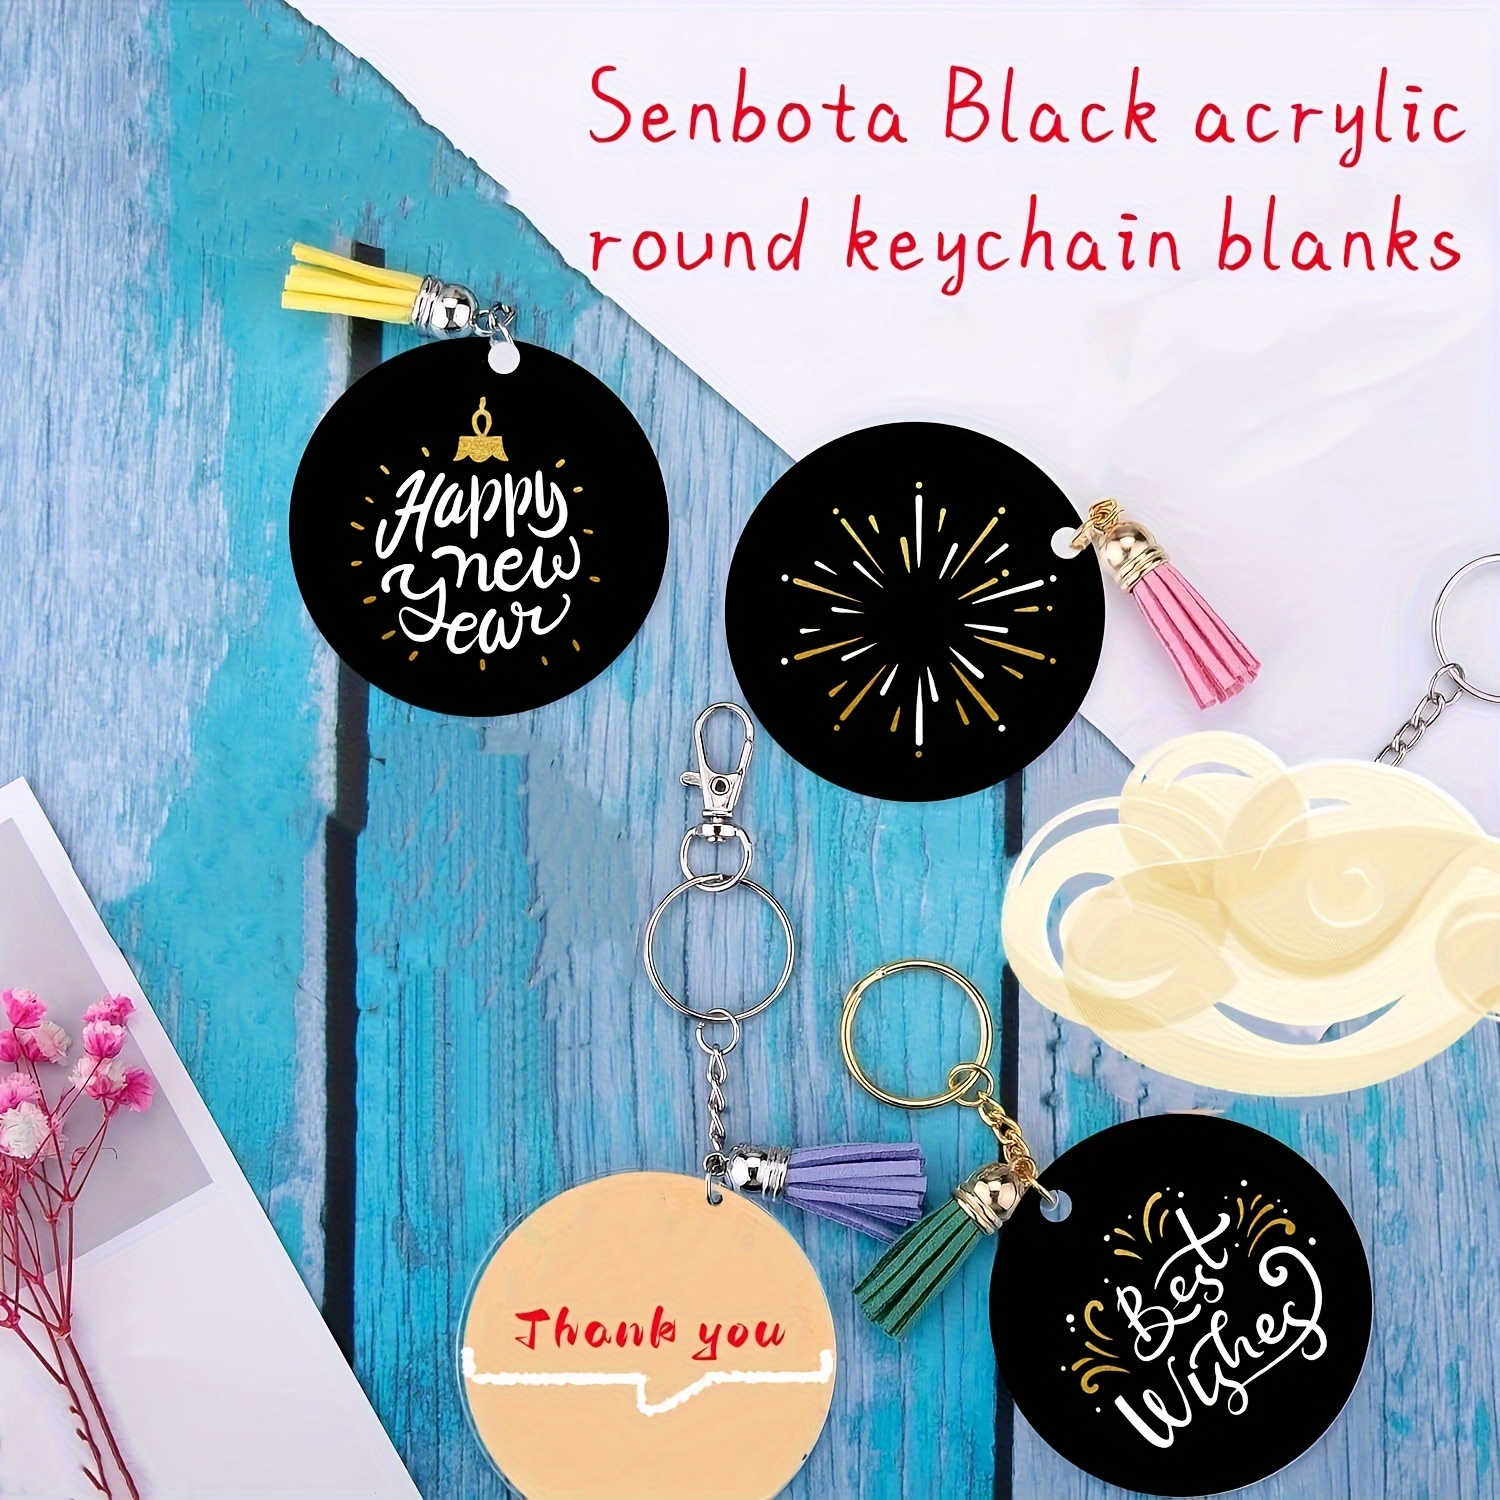 Black Acrylic Rounds round Acrylic Blanks Ornament black - Temu